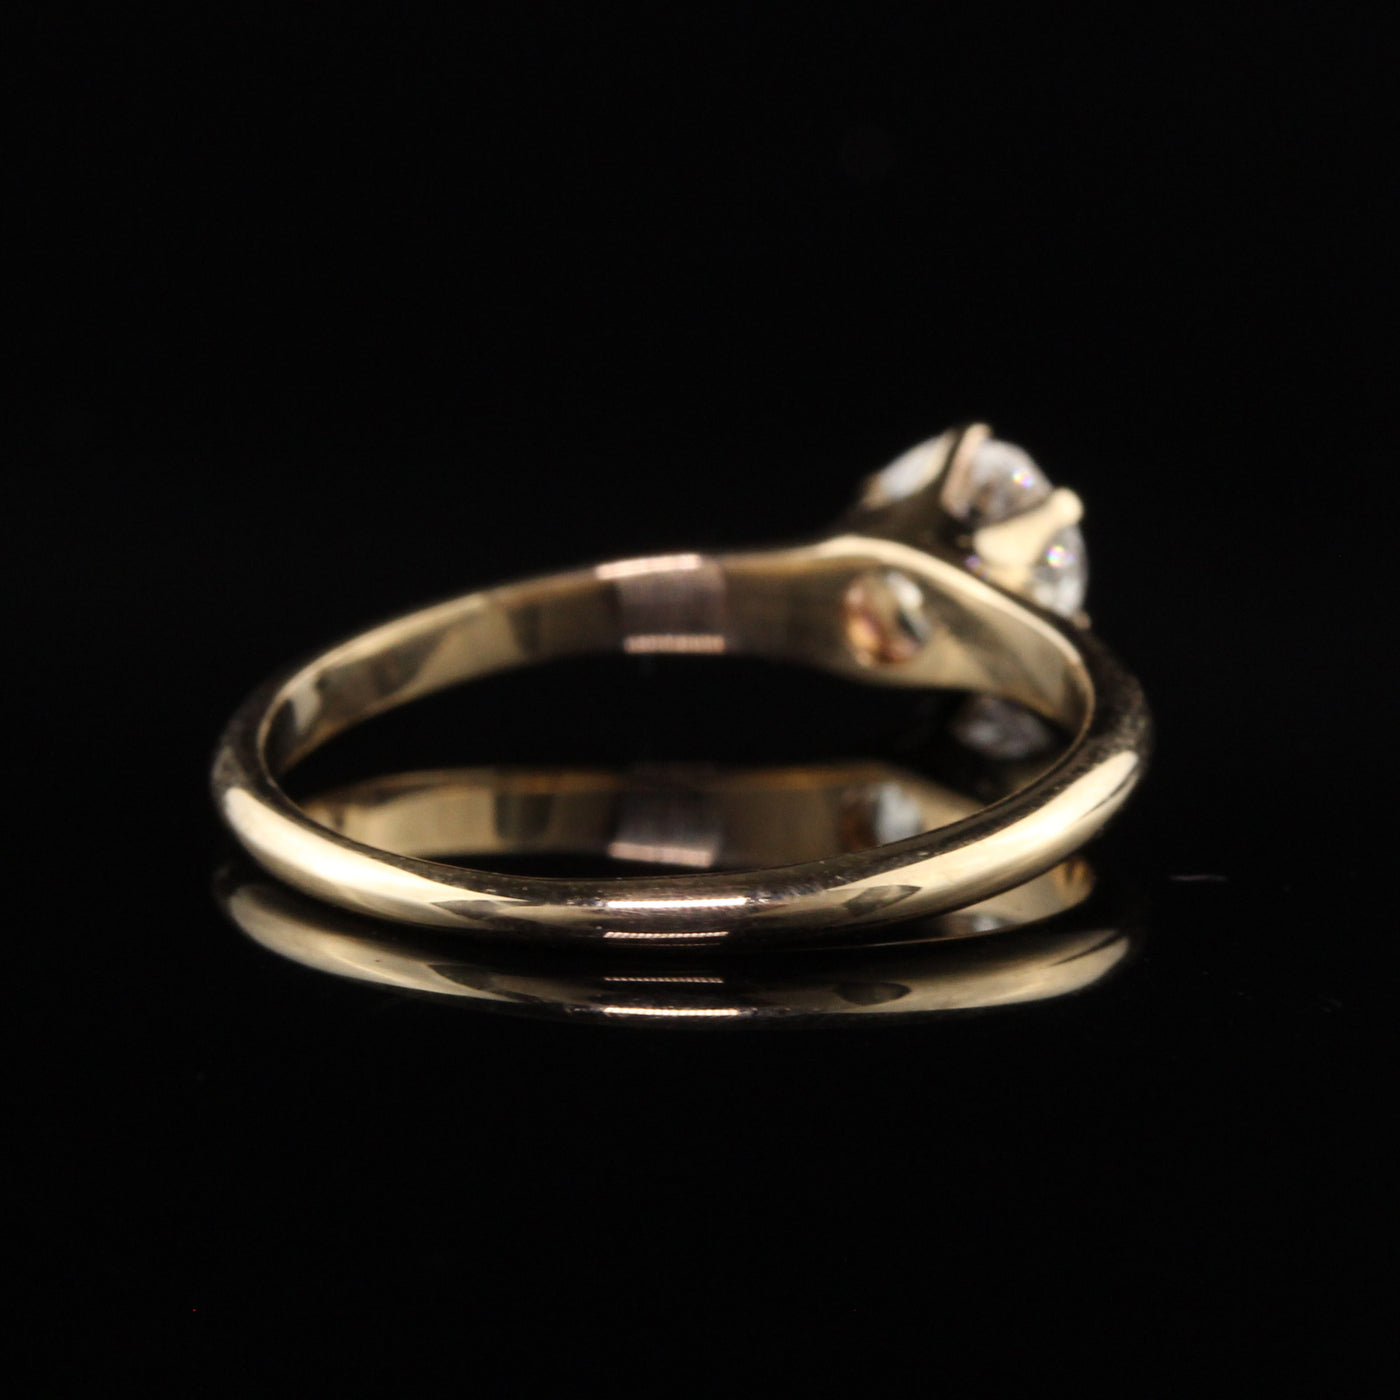 Antique Art Deco 14K Yellow Gold Old Mine Diamond Engagement Ring